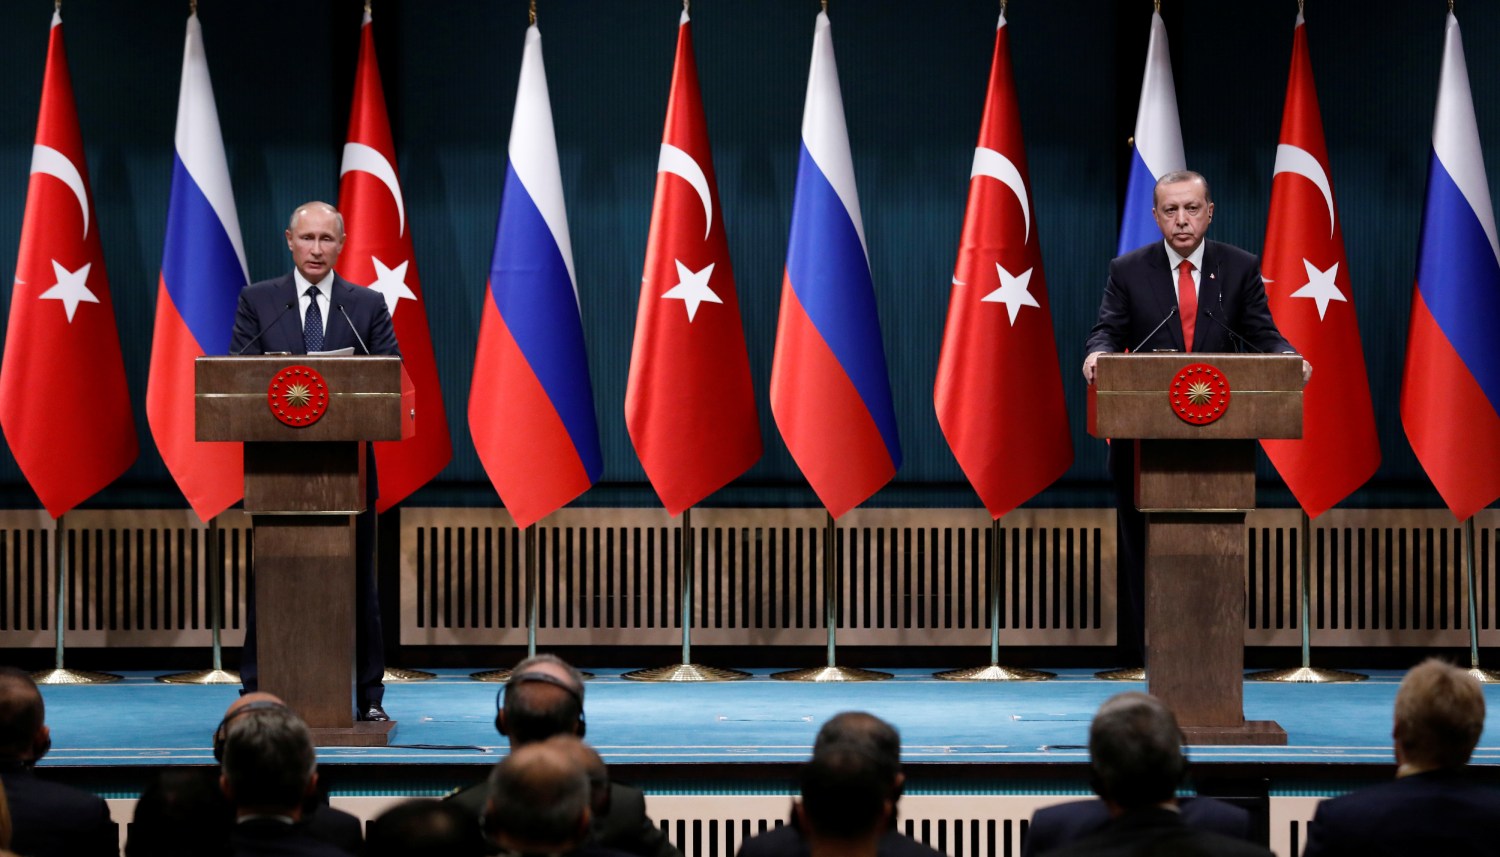 Turkish President Tayyip Erdogan and Russian President Vladimir Putin attend a press conference in Ankara, Turkey, September 28, 2017. REUTERS/Umit Bektas - RC1270F717C0